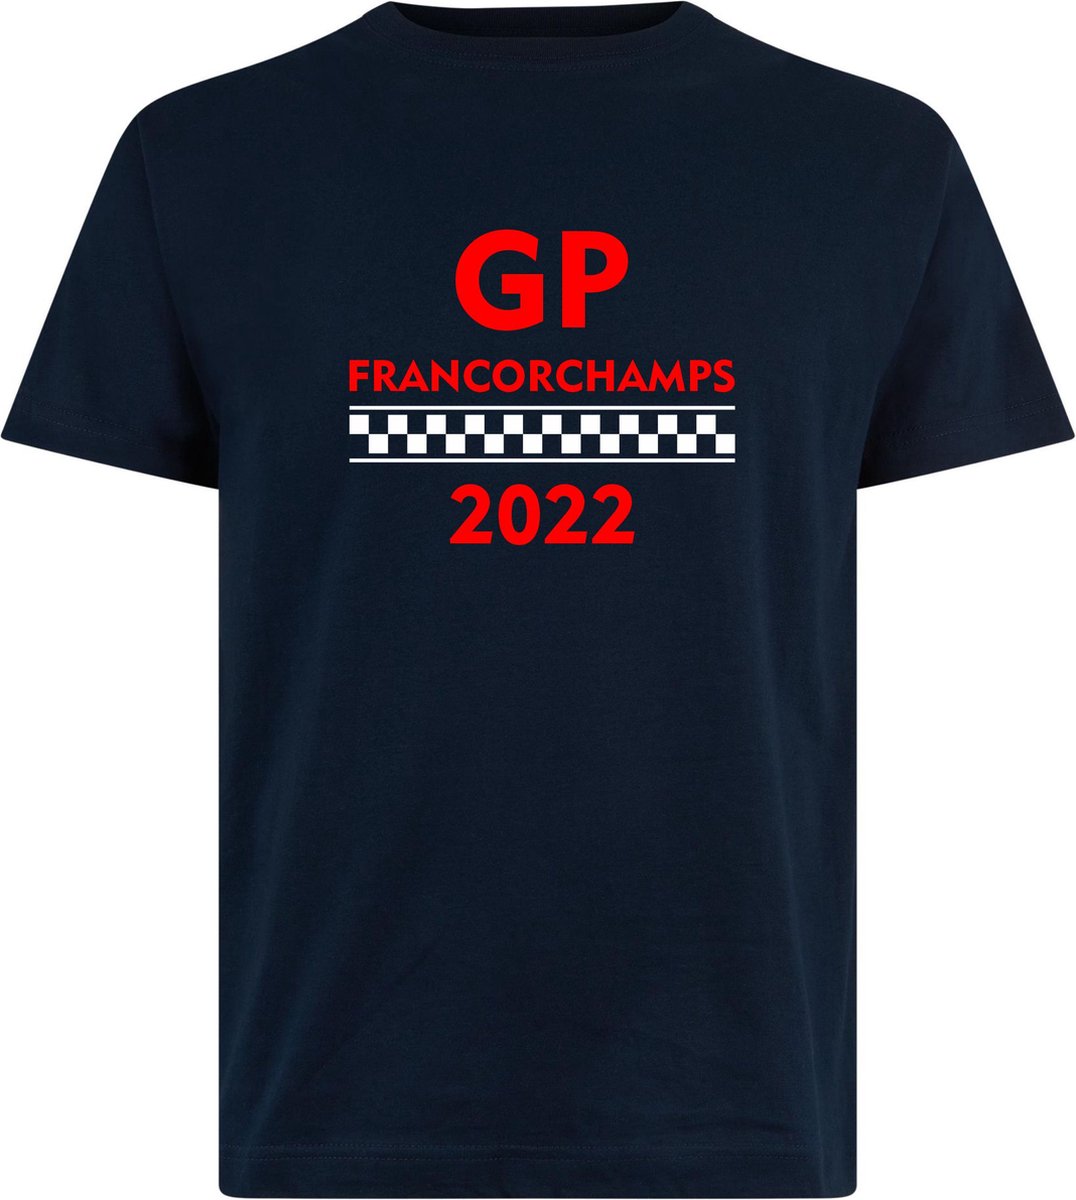 T-shirt kinderen GP Francorchamps 2022 | Max Verstappen / Red Bull Racing / Formule 1 fan | Grand Prix Circuit Spa-Francorchamps | kleding shirt | Navy | maat 80